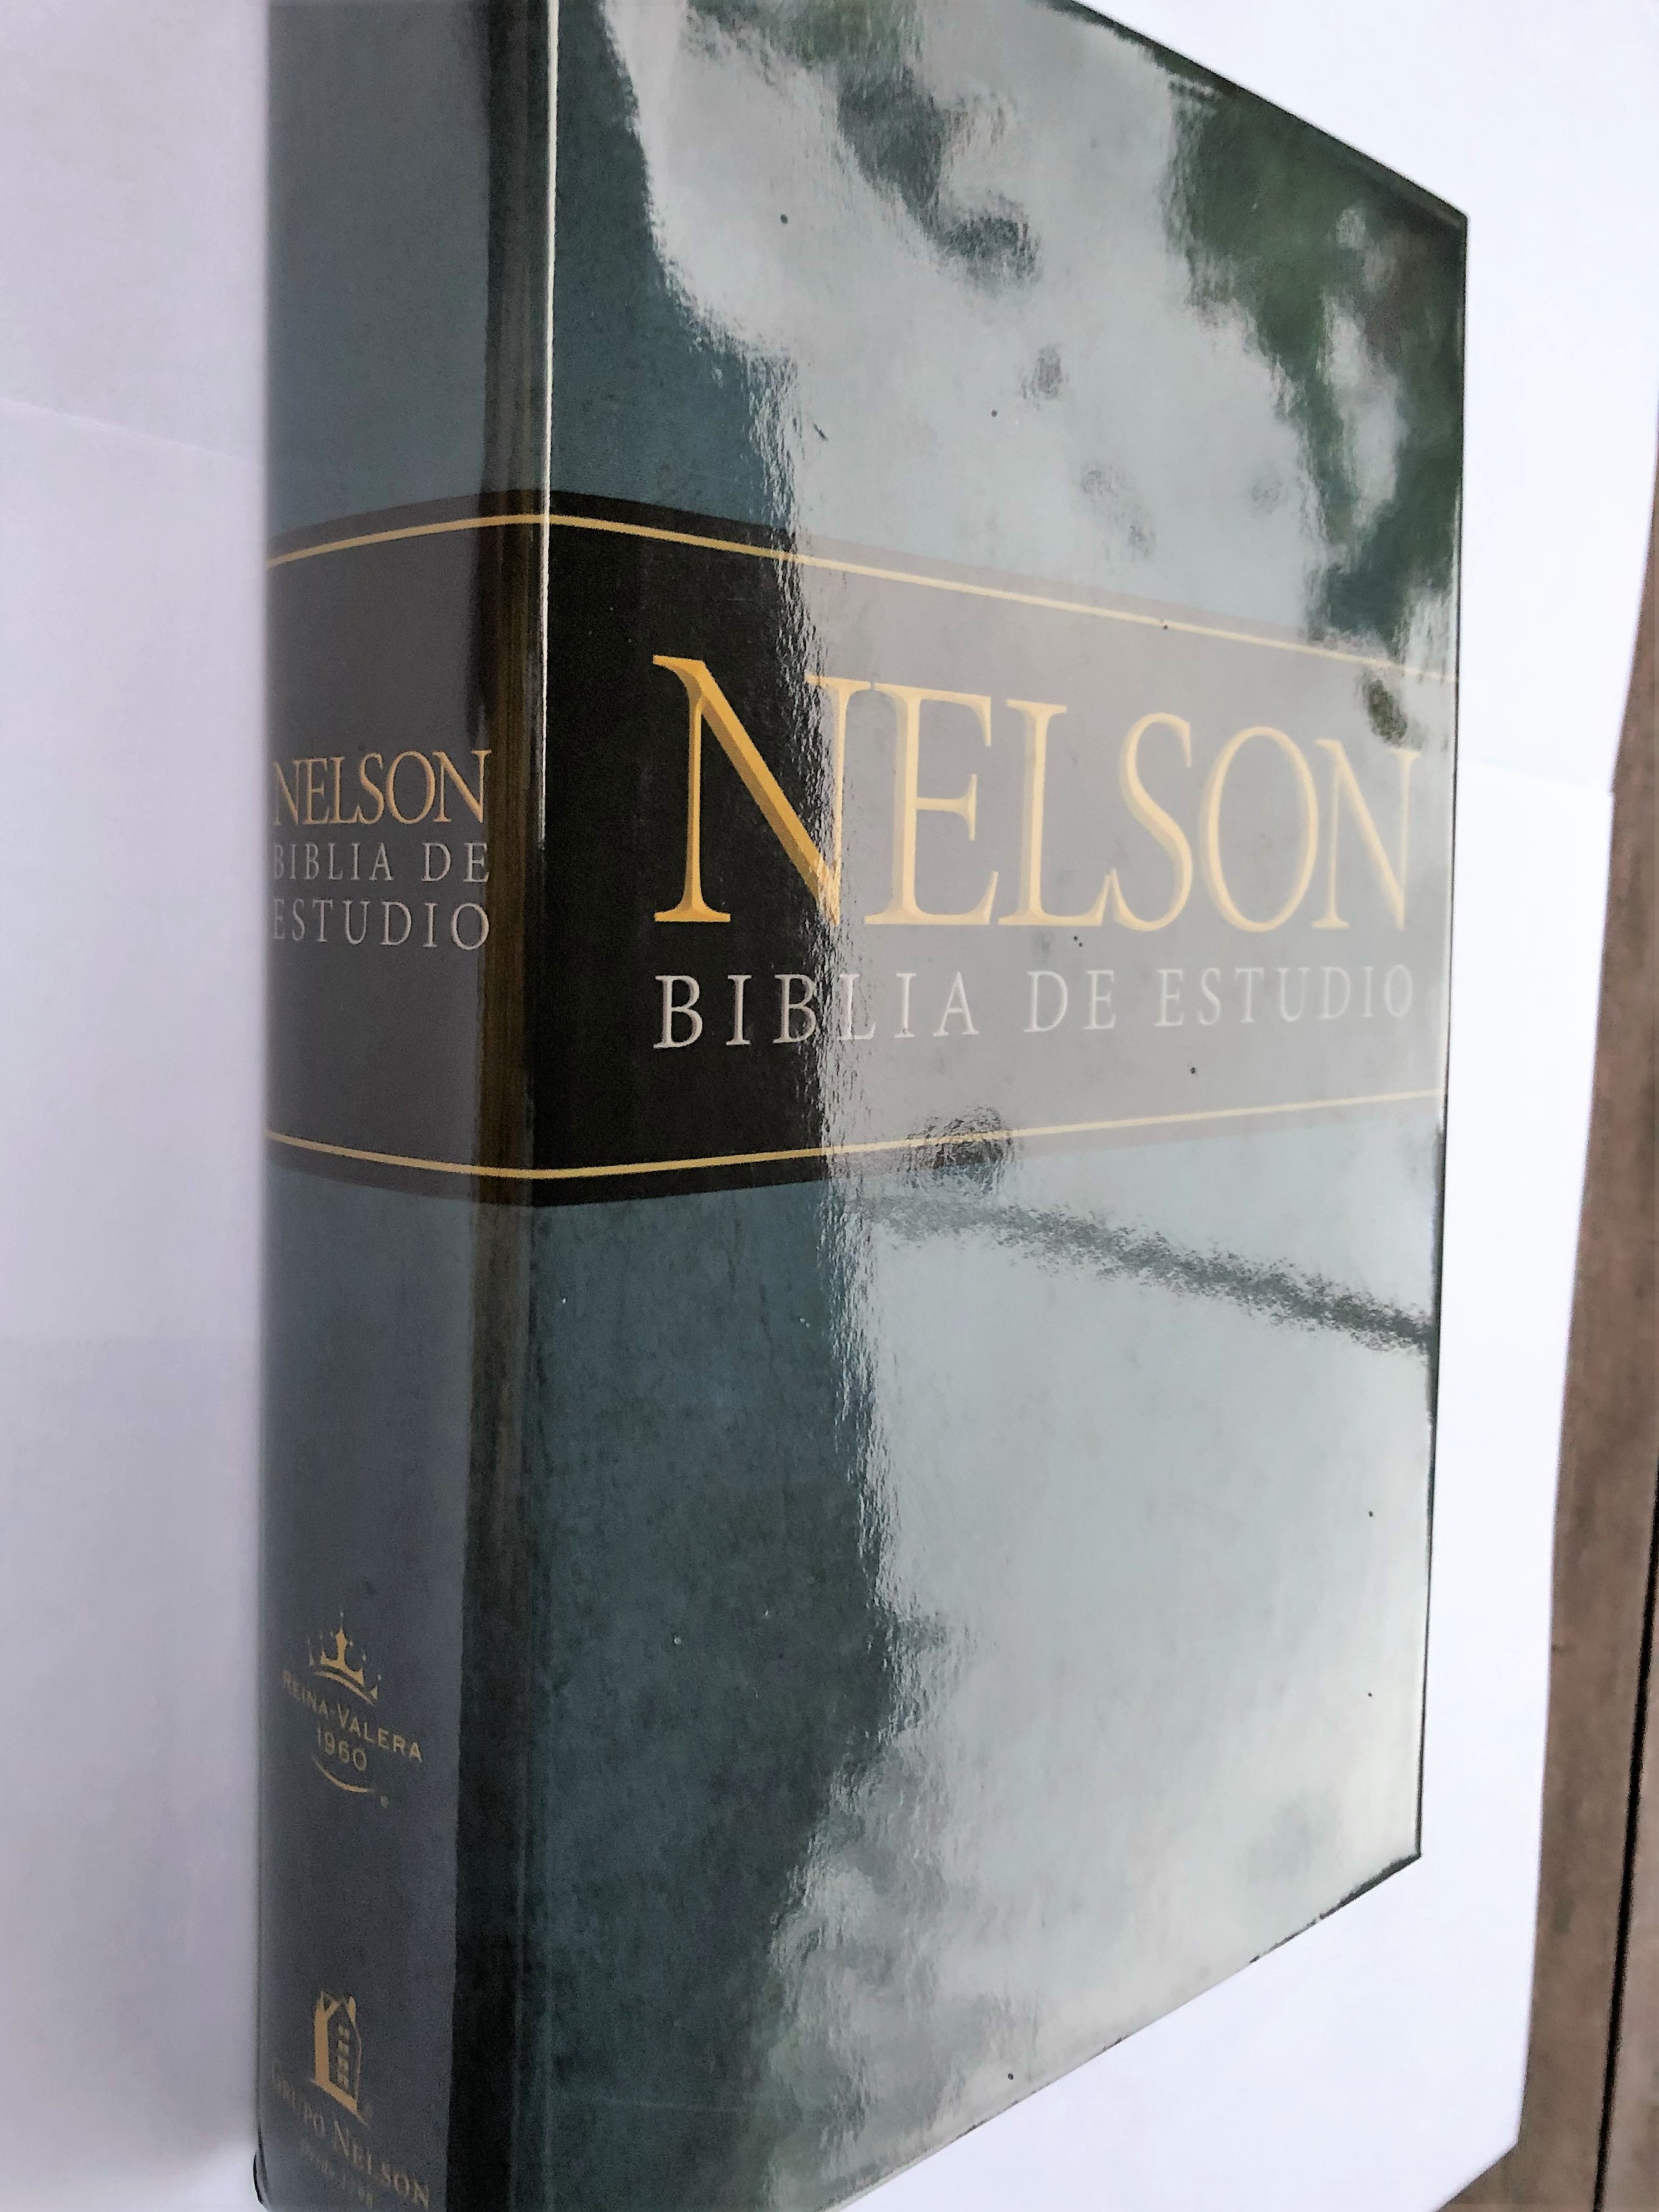 nelson-biblia-de-estudio-the-nelson-study-bible-in-spanish-language-with-nelson-s-complete-study-system-reina-valera-1960-tapa-dura-hardcover-3-.jpg